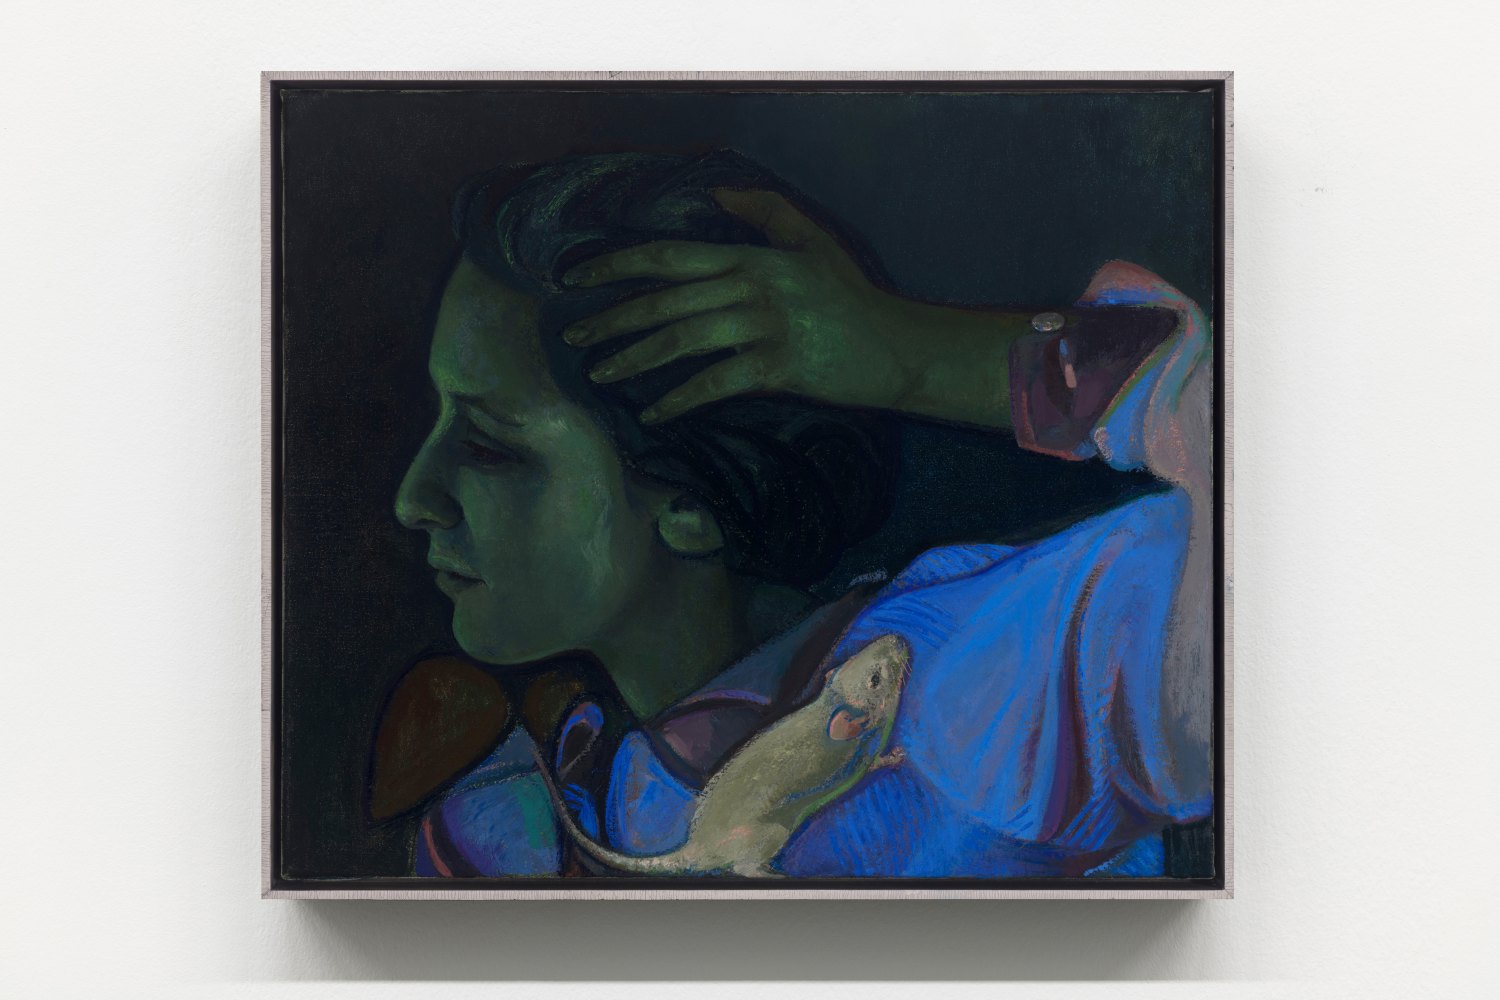 Victor Man Rupture, 2019 - 2020 Oil on canvas, 44.2 x 52 cm